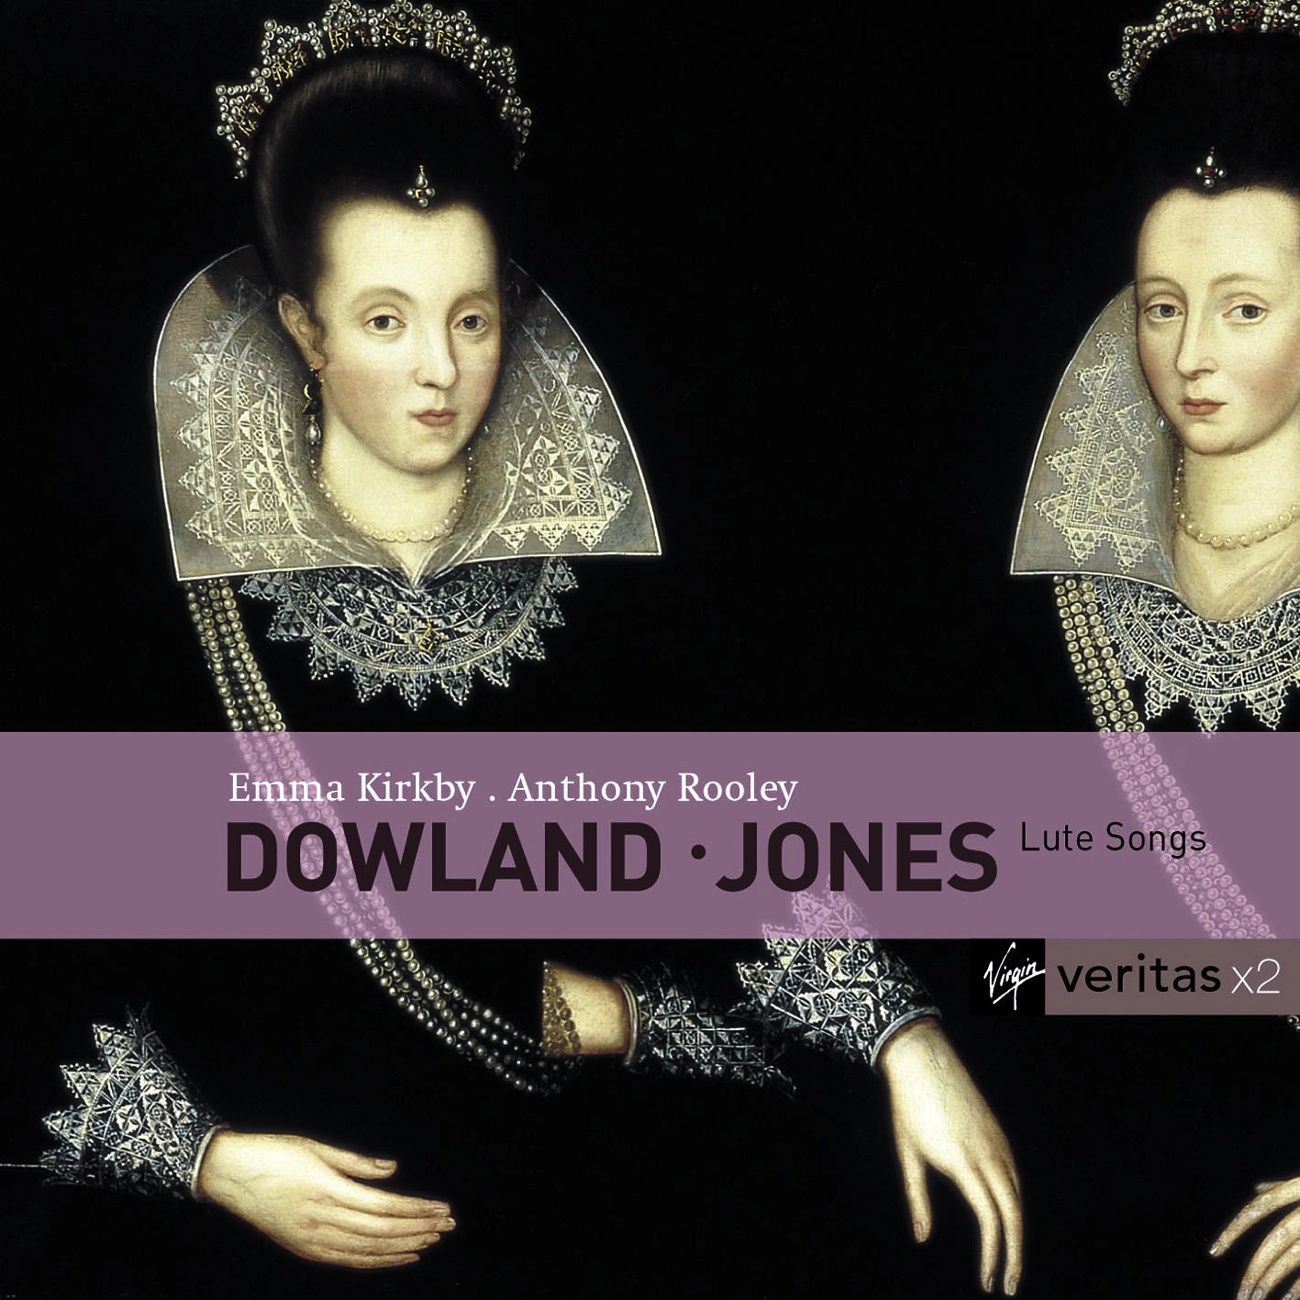 Dowland & Jones: The English Orpheus